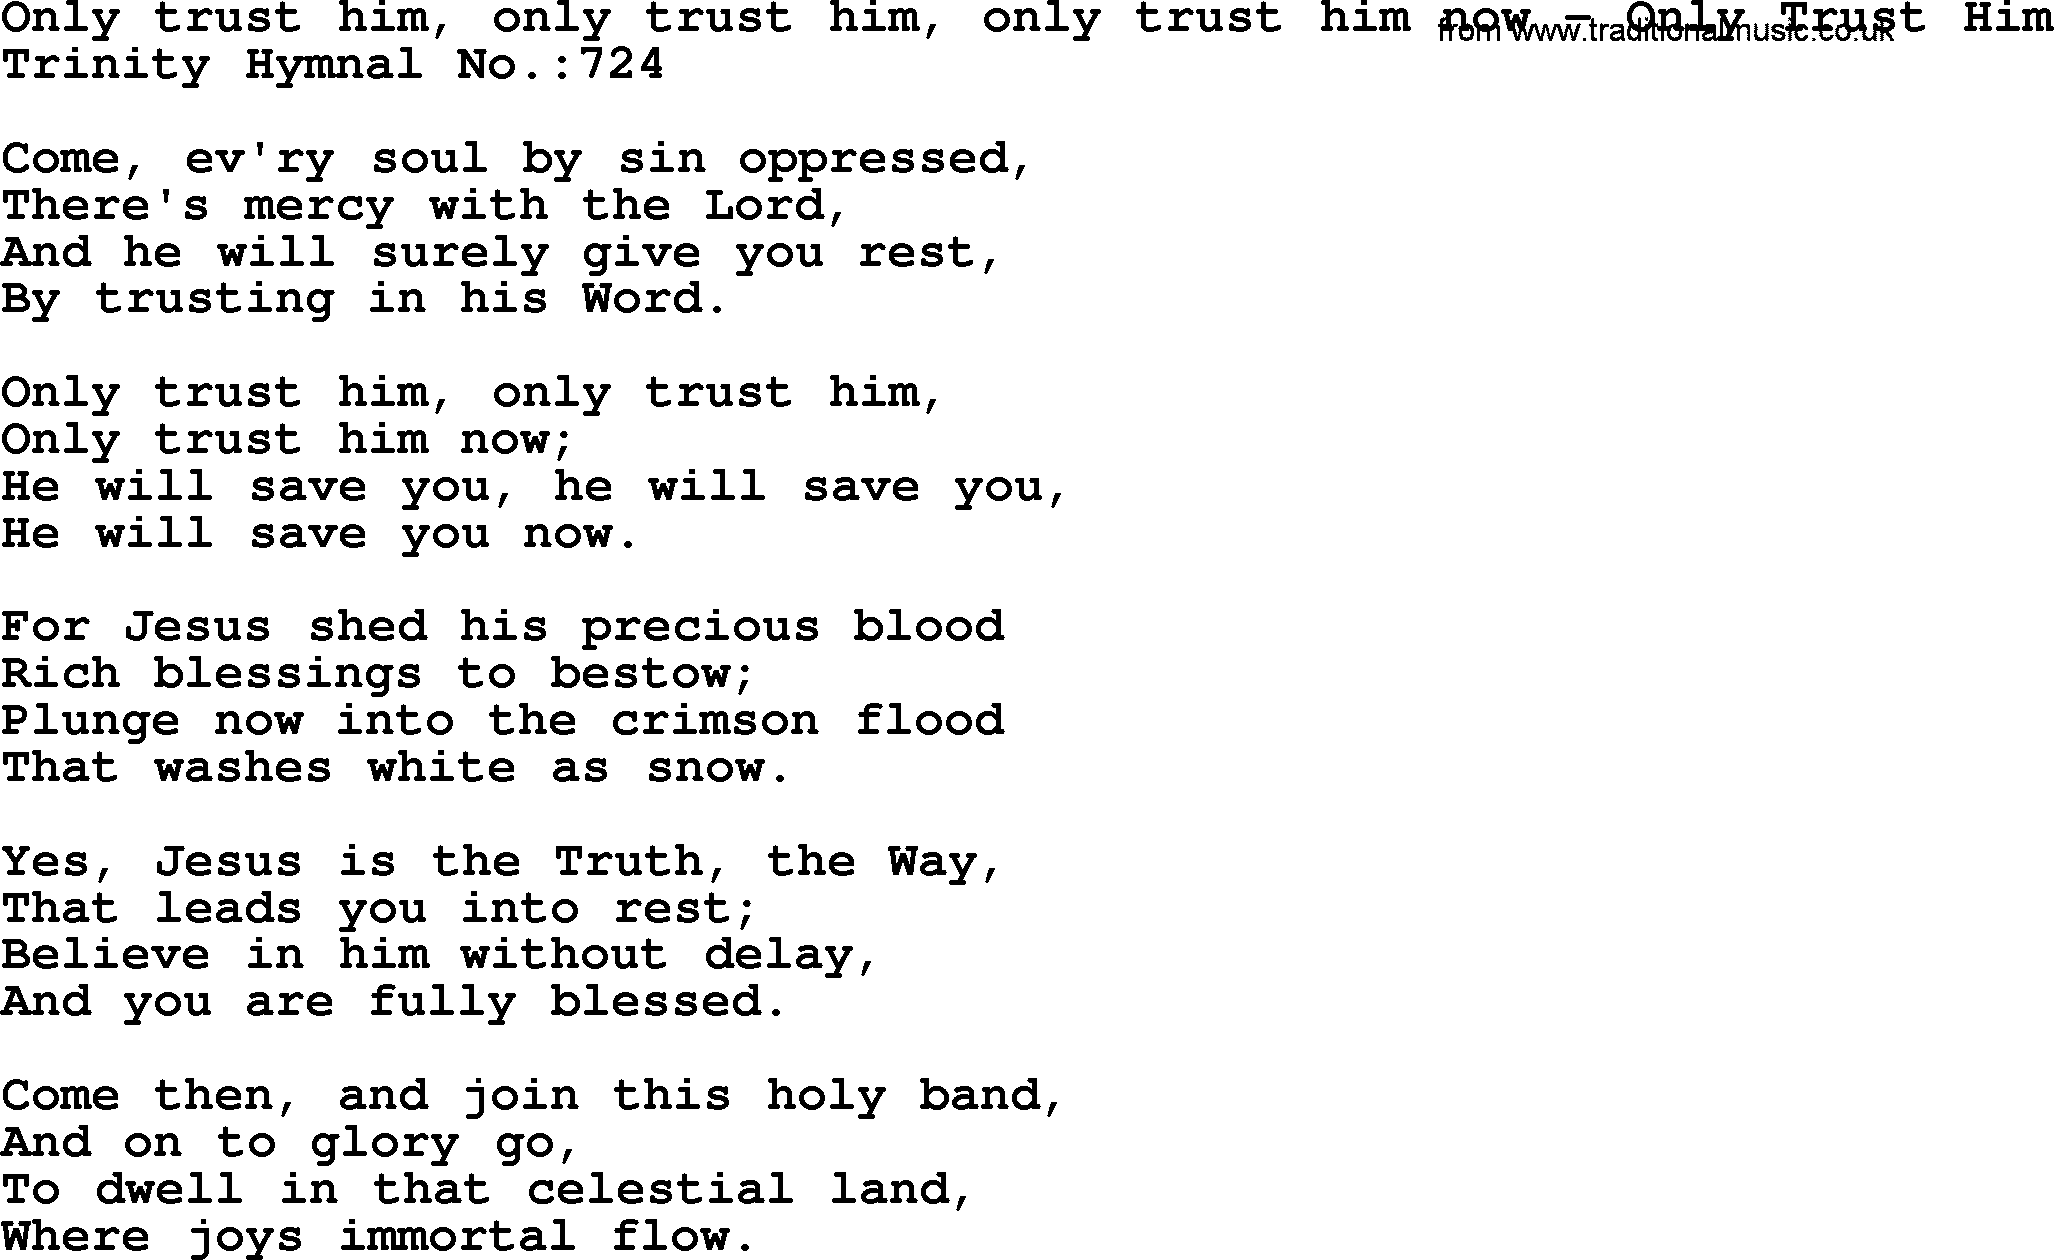 Trinity Hymnal Hymn: Only Trust Him, Only Trust Him, Only Trust Him Now--Only Trust Him, lyrics with midi music